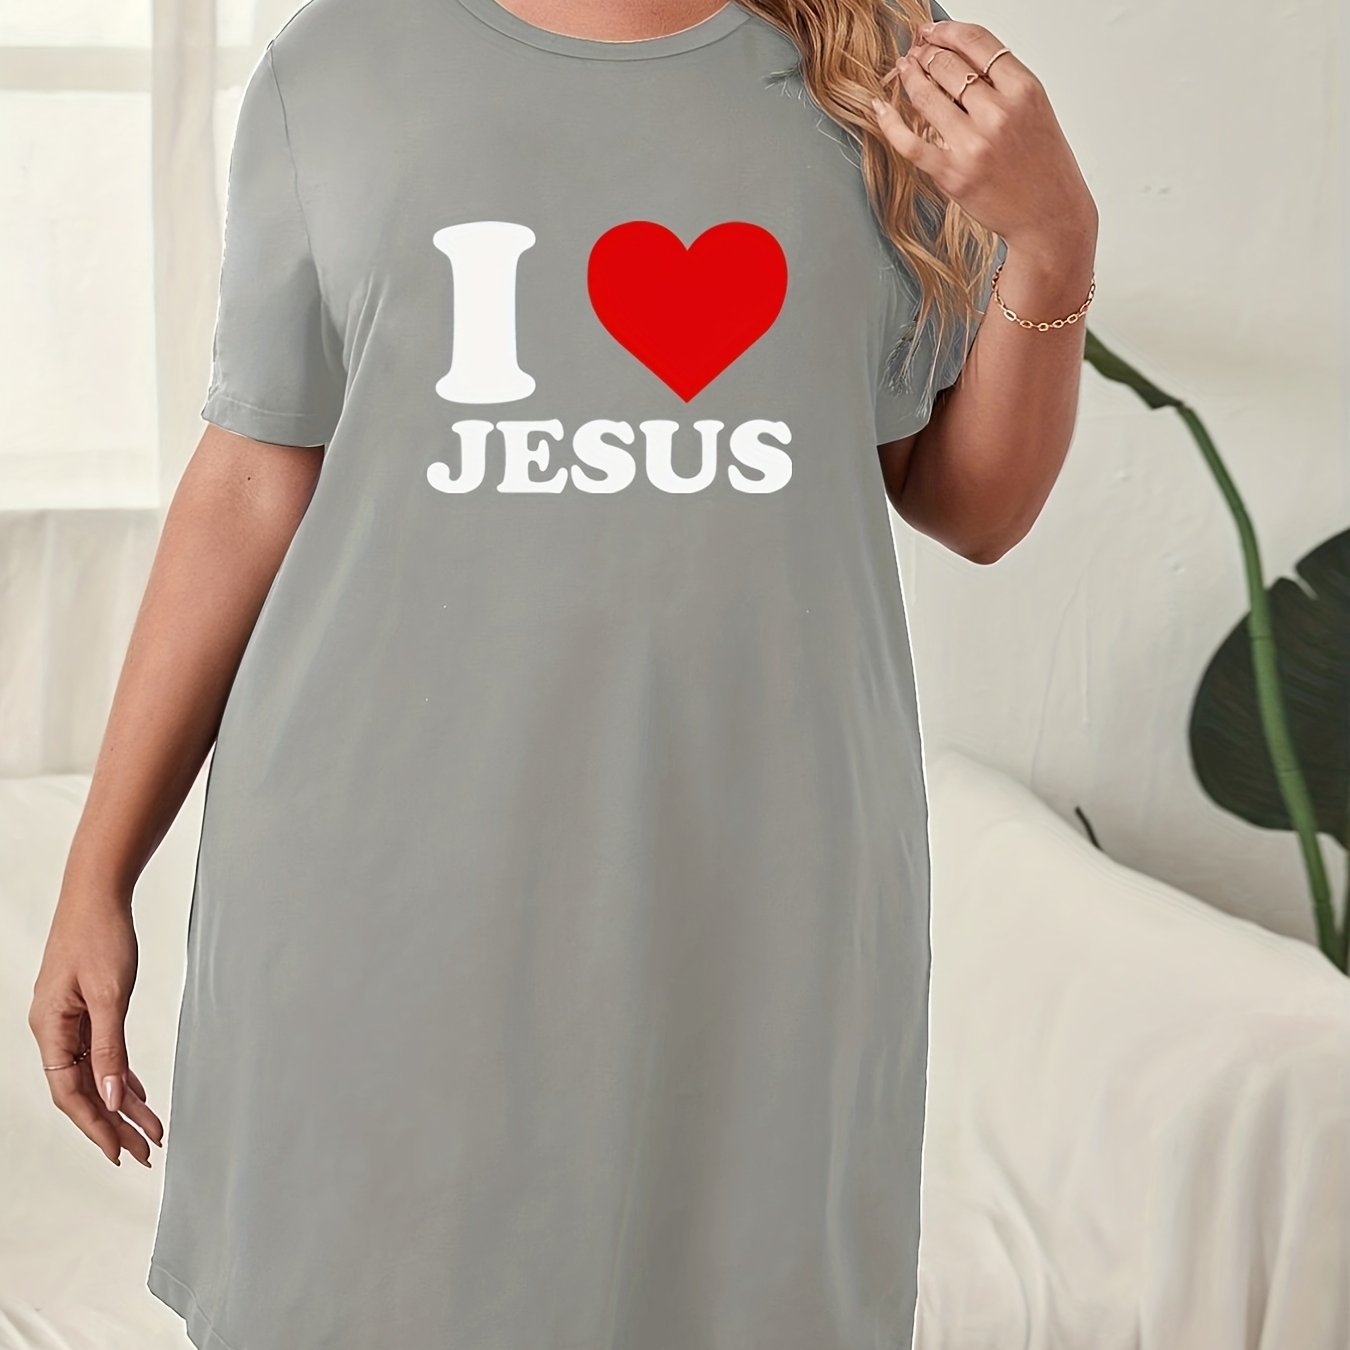 I Love Jesus Plus Size Women's Christian Pajamas claimedbygoddesigns